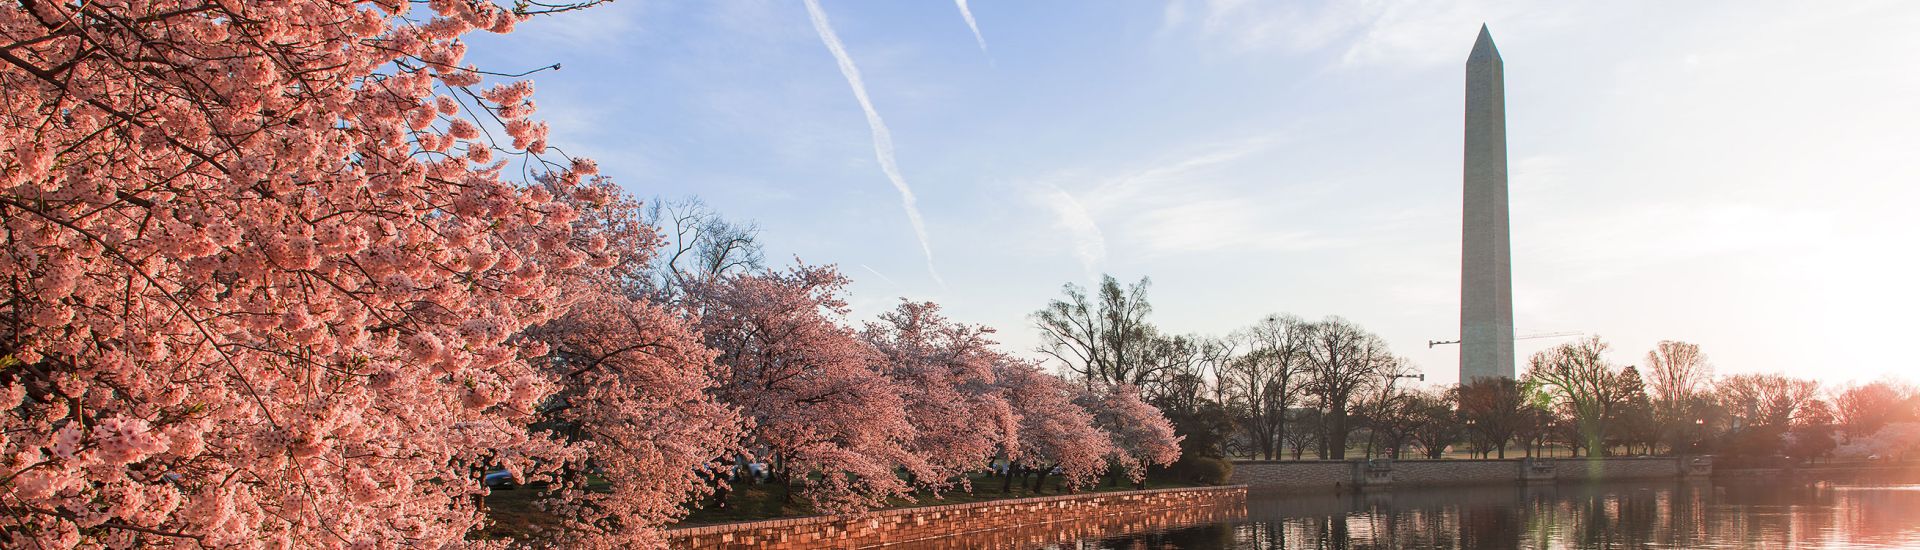 Washington monument during cherry blossom season